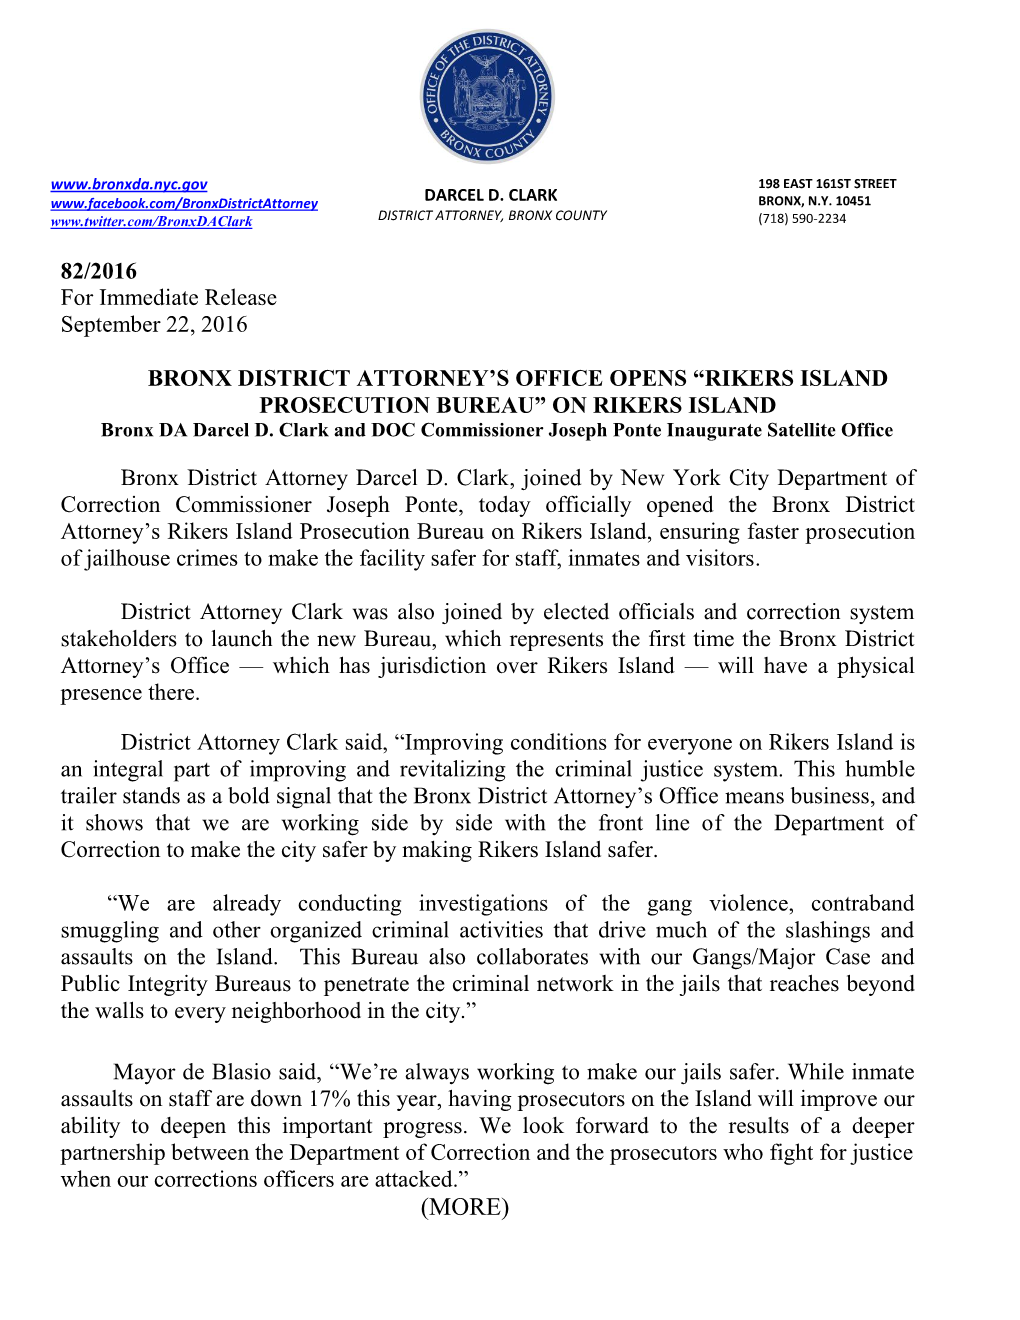 Bronx District Attorney's Office Opens Rikers Island Prosecution Bureau